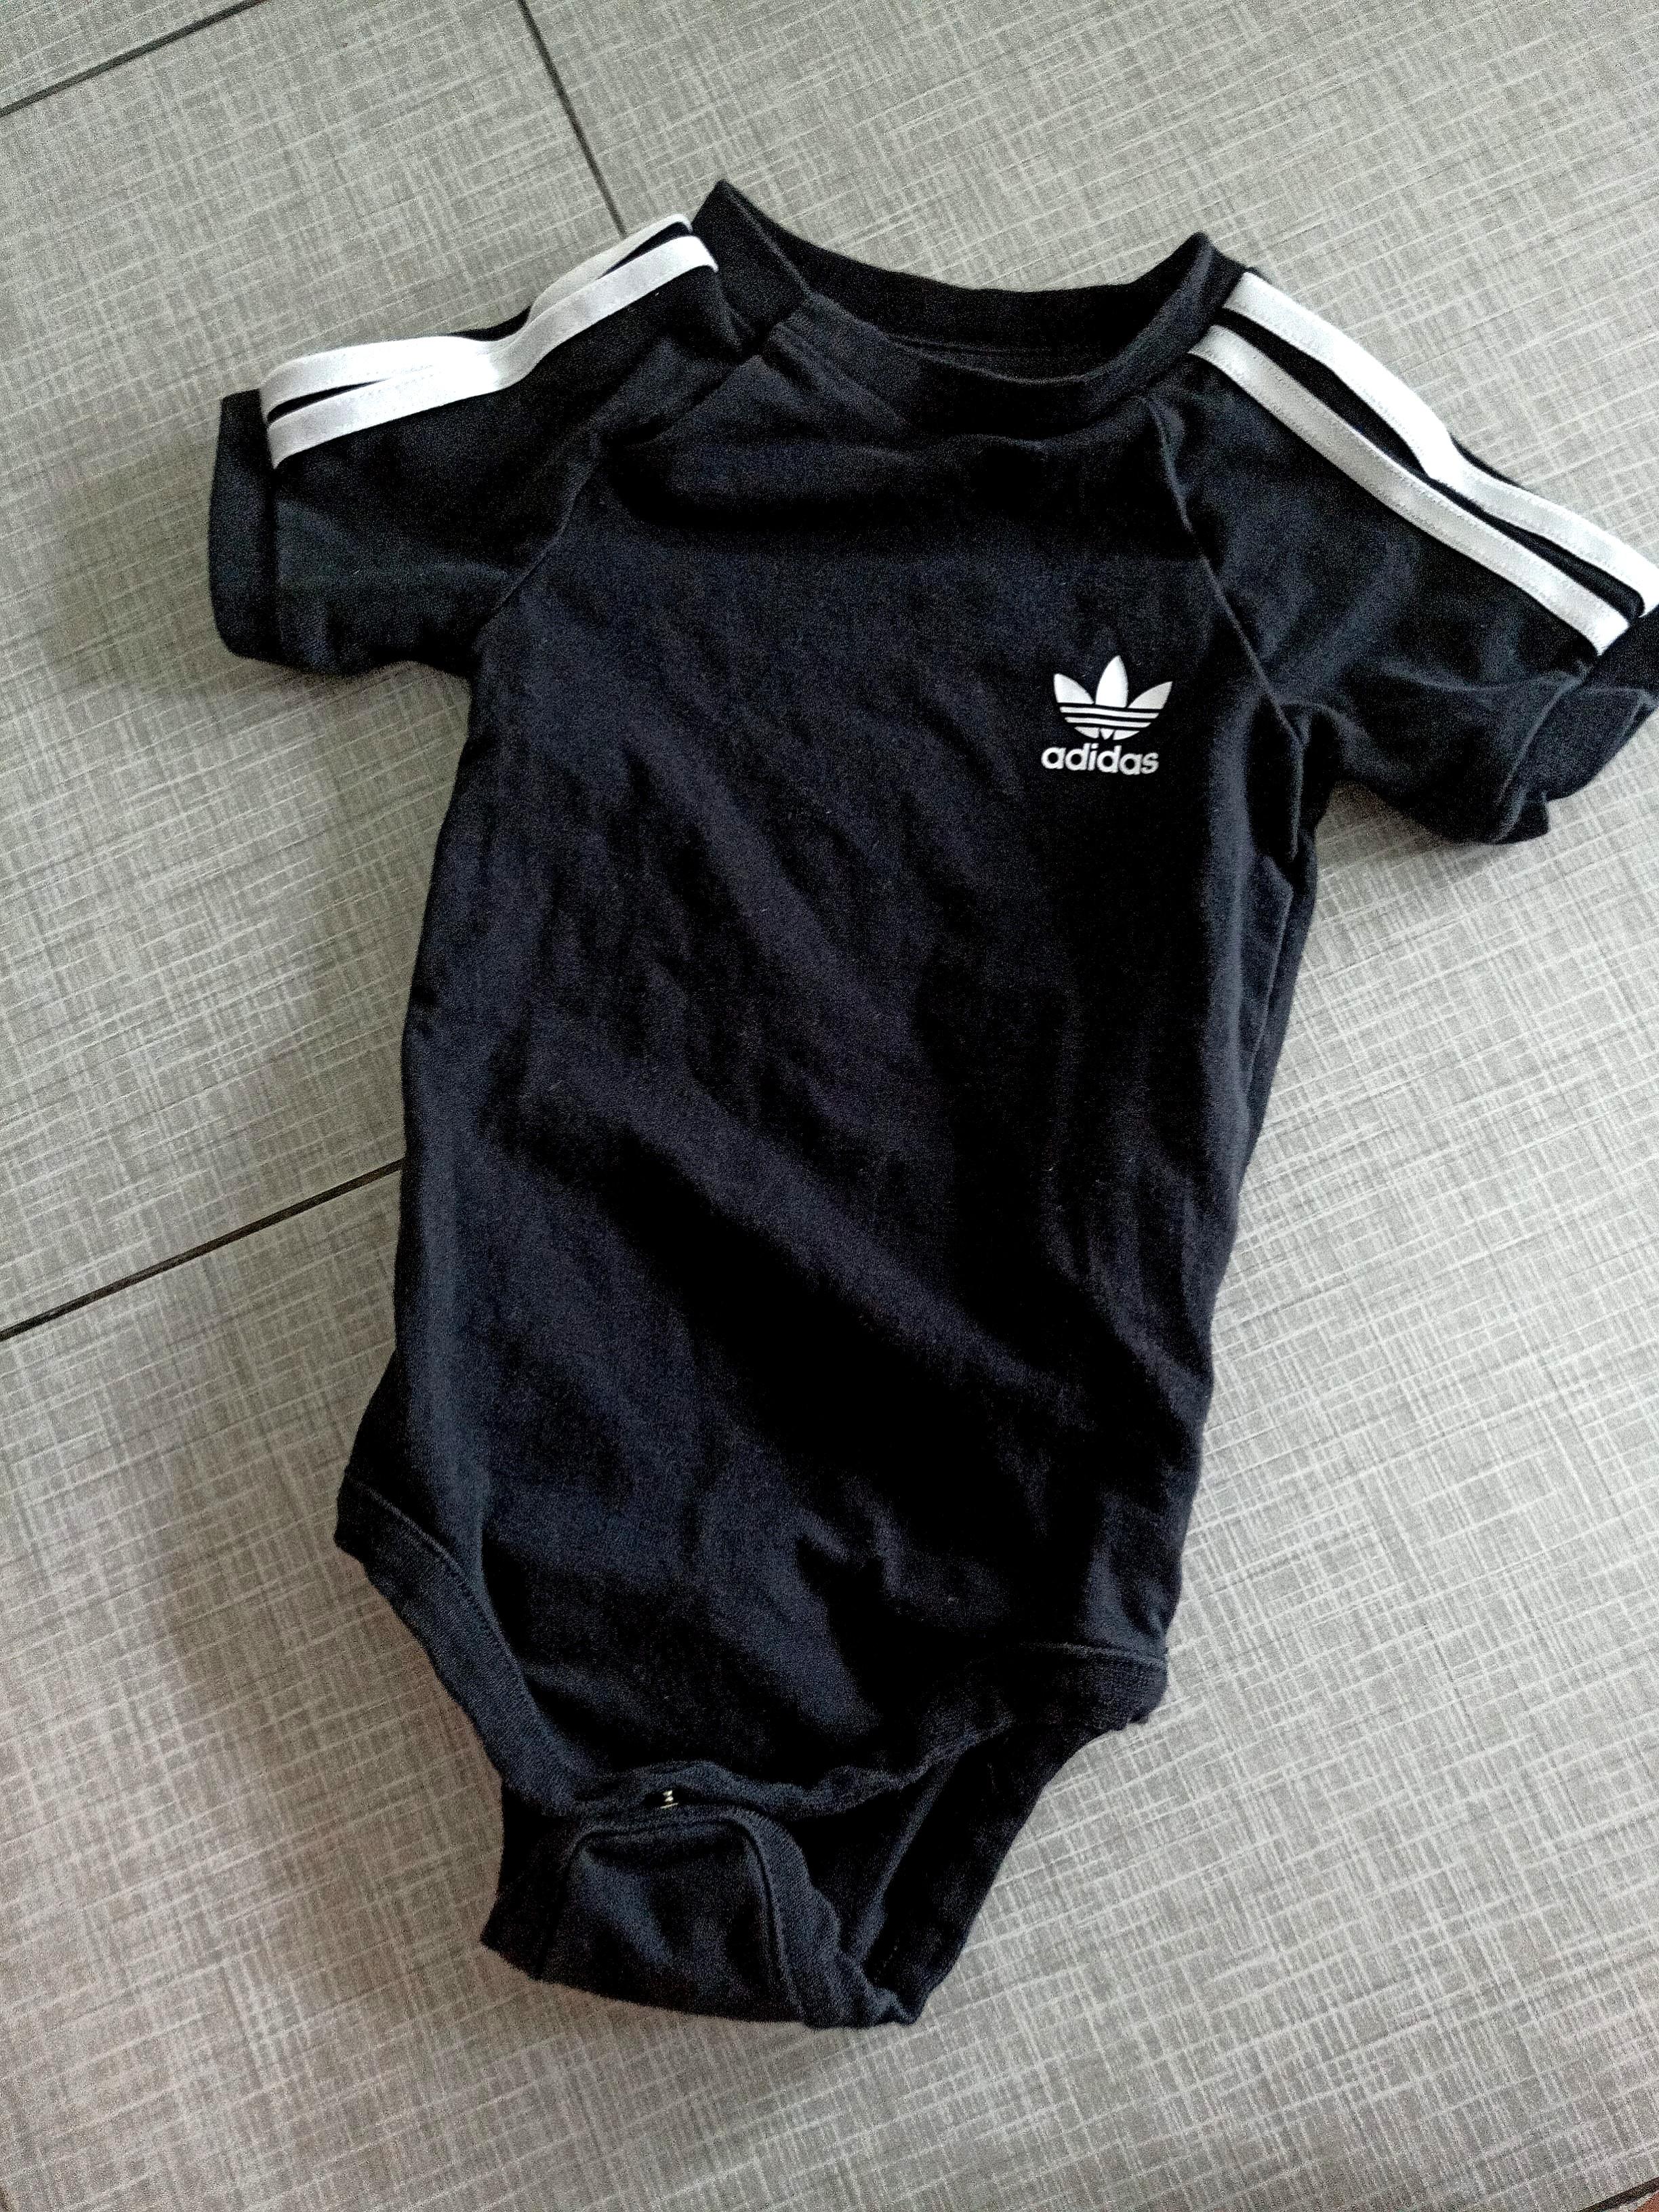 baby jumpsuit adidas